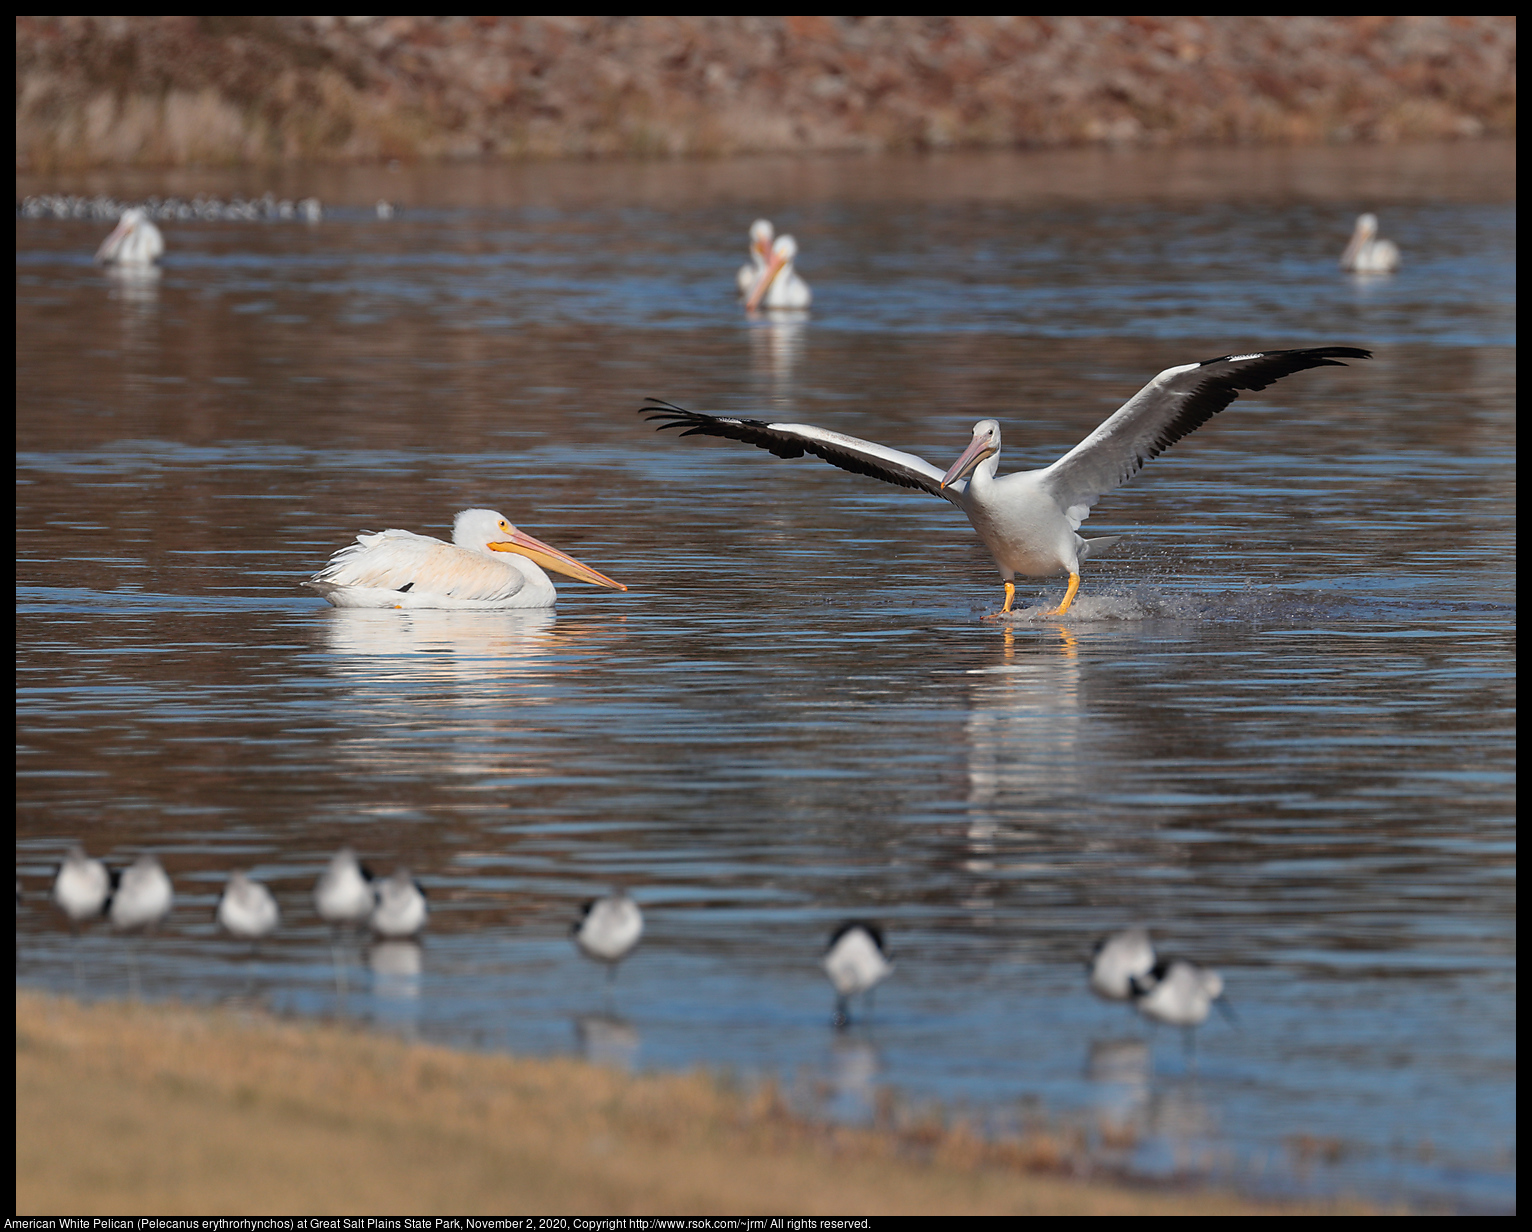 American White Pelican (Pelecanus erythrorhynchos) at Great Salt Plains State Park, November 2, 2020